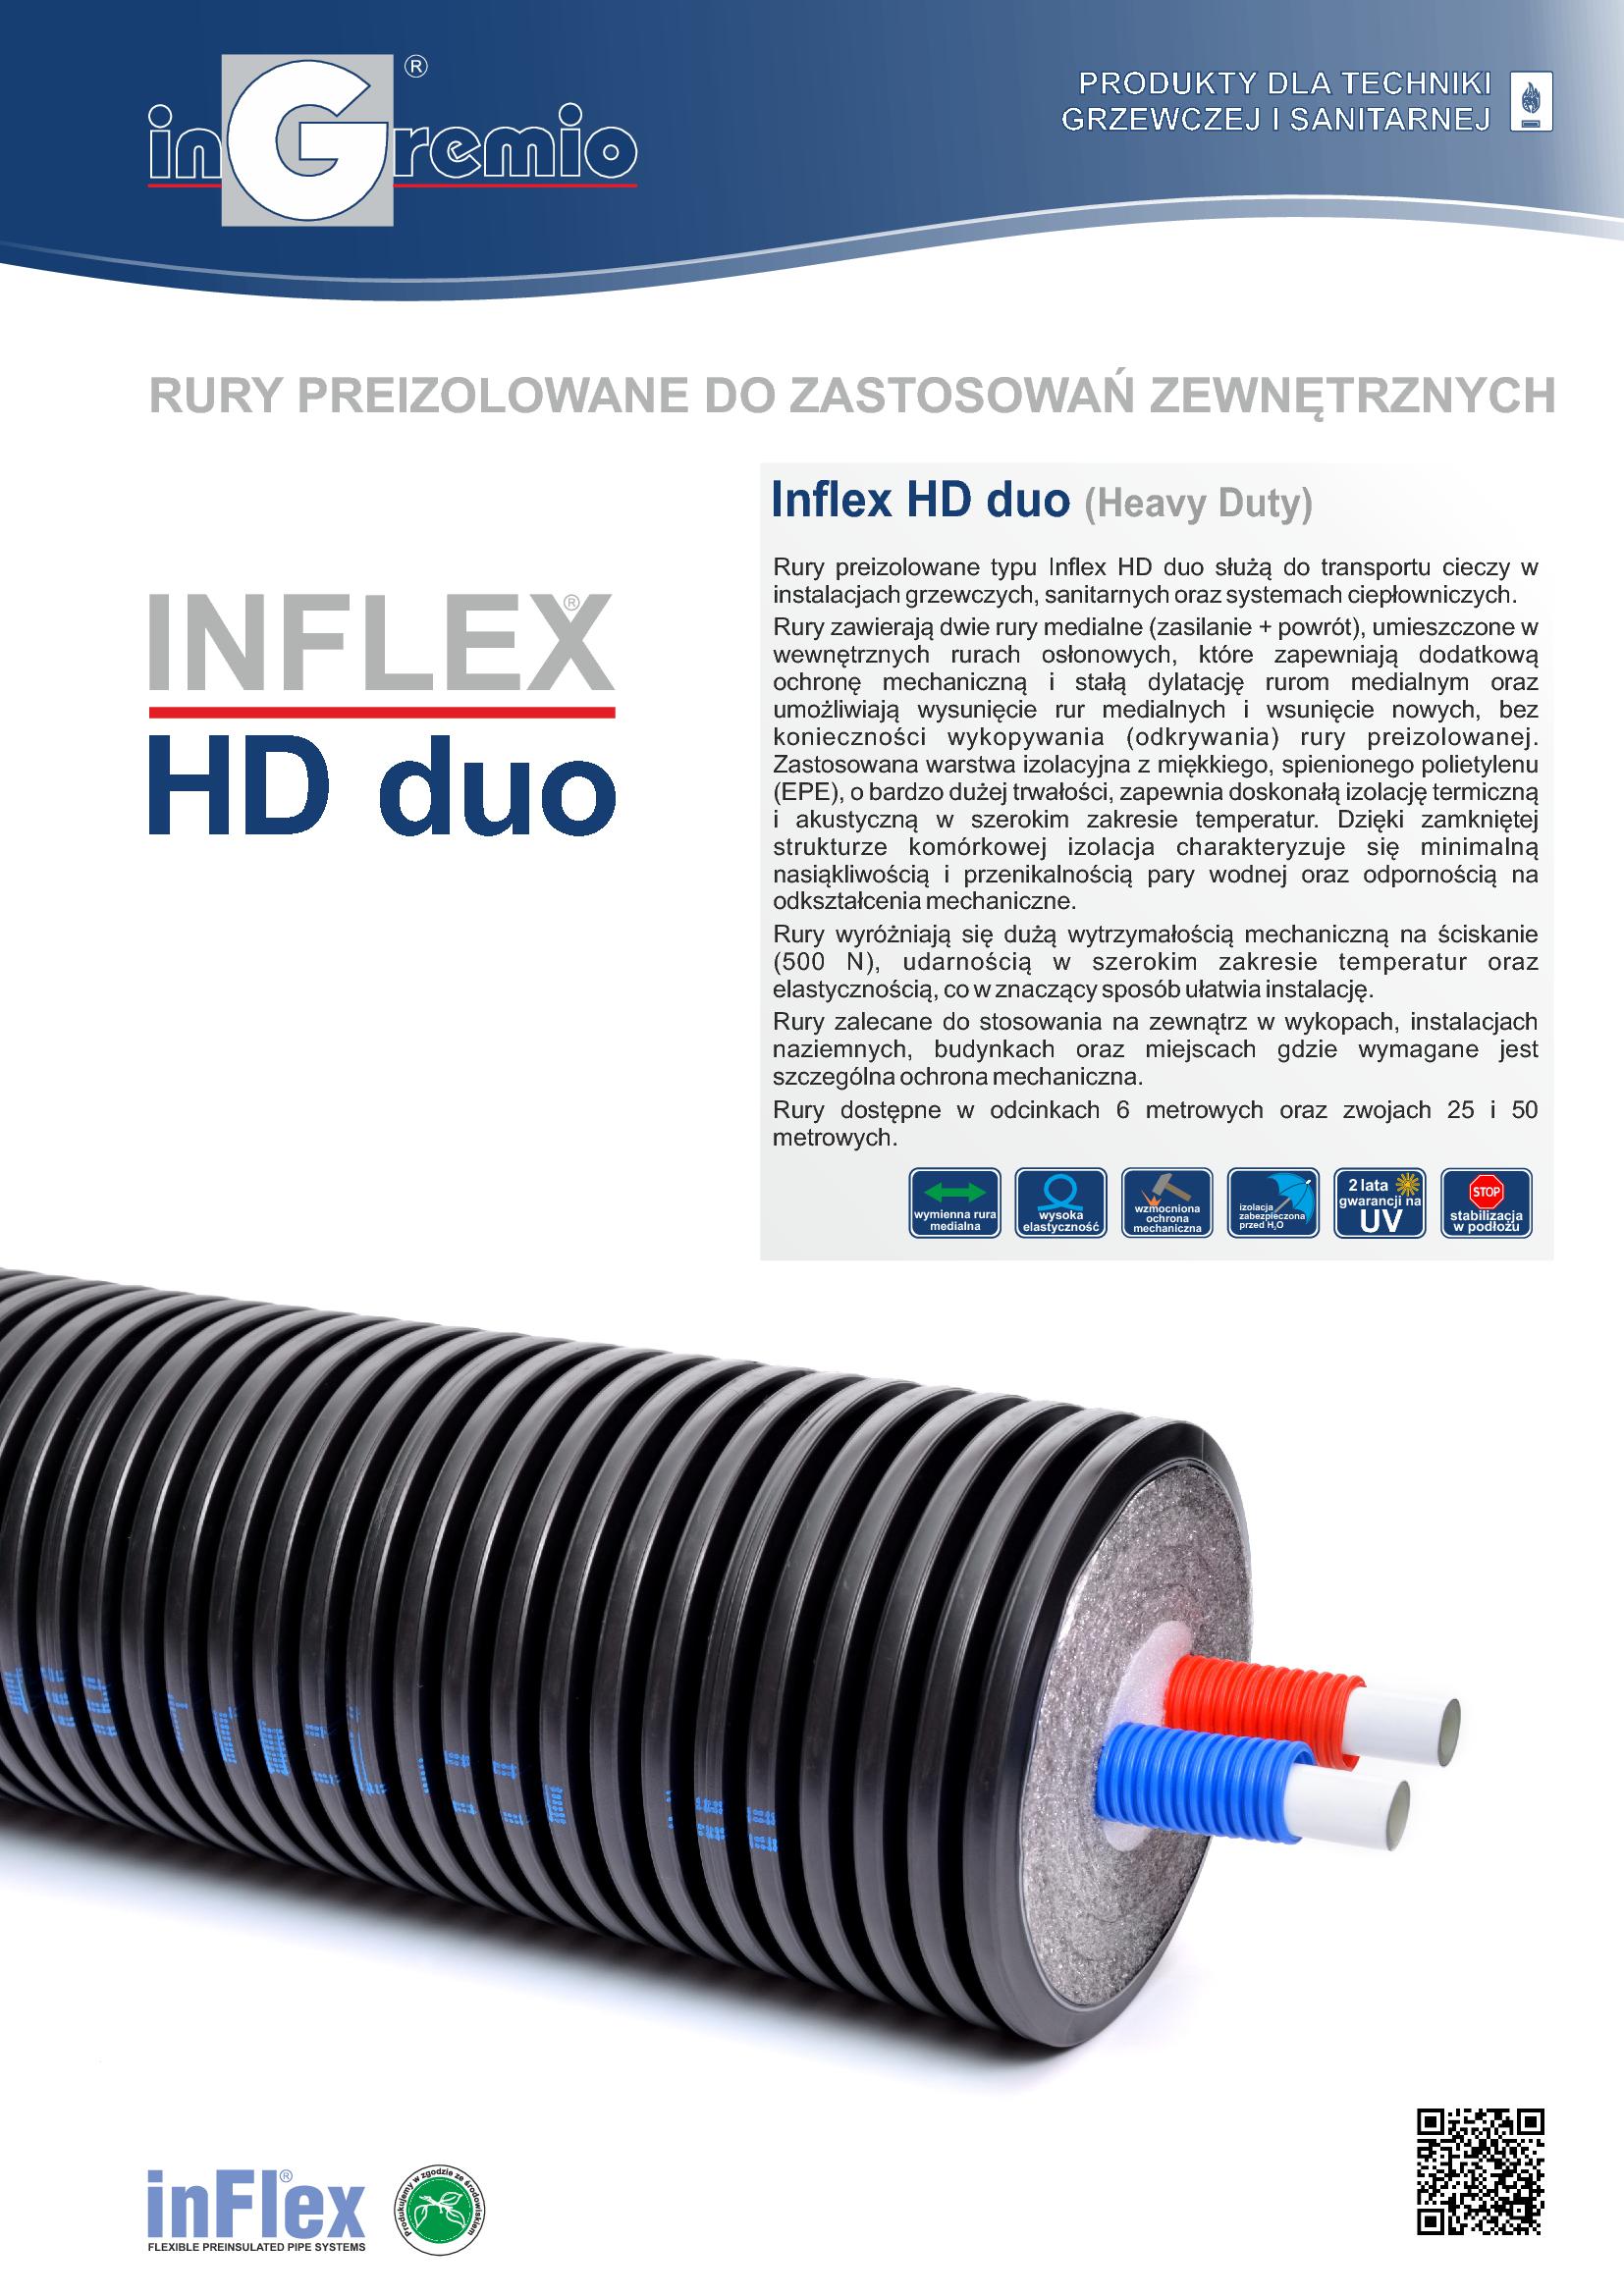 INGR_Catalog_Inflex-HD-duo